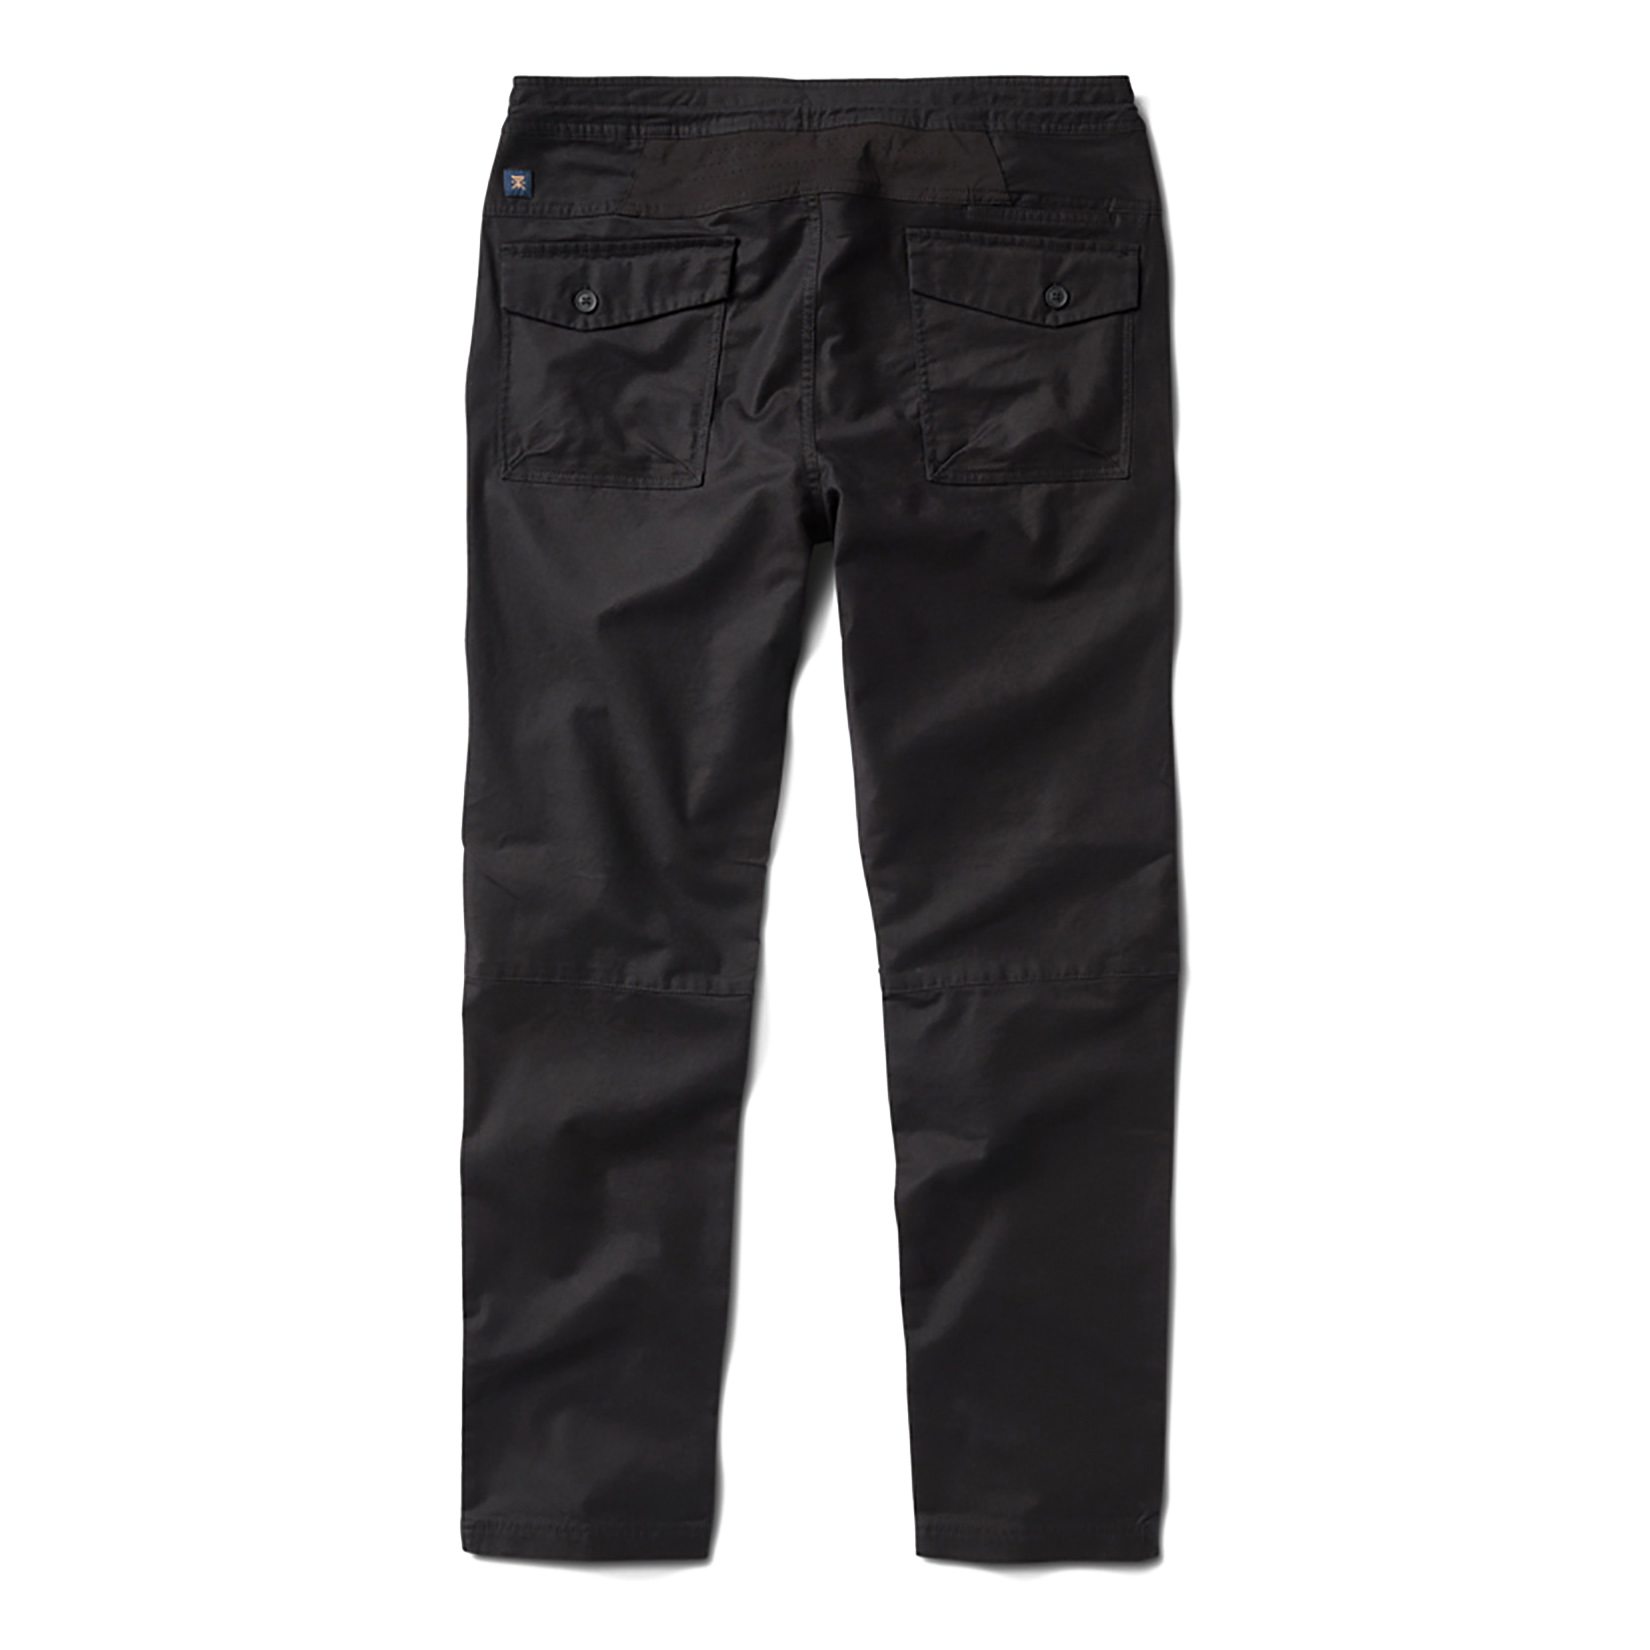 Xysaqa Men's Slim Fit Stretch Flat Front Travel Pant Men's Casual Straight  Legs Work Office Pants Big & Tall Pants for Men - Walmart.com